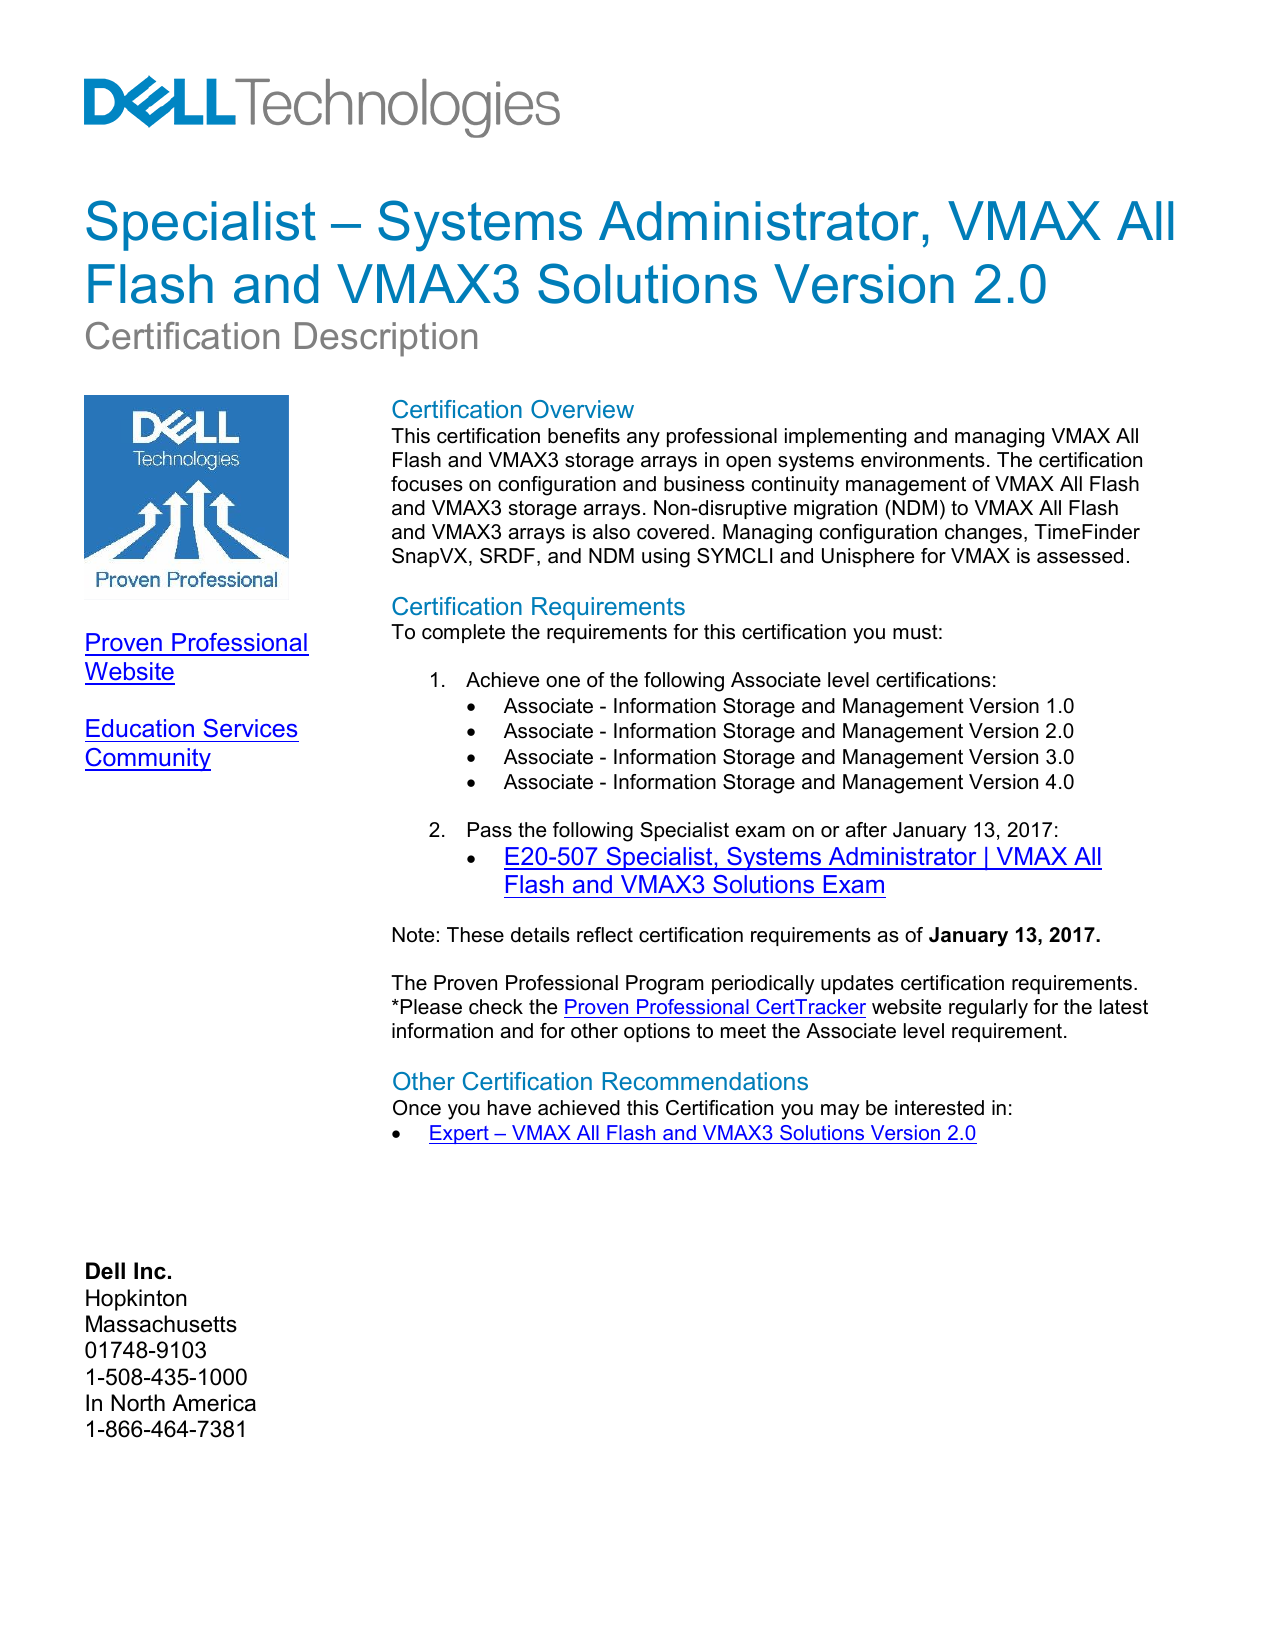 E20 507 SA VMAX3 Solutions Specialist Exam